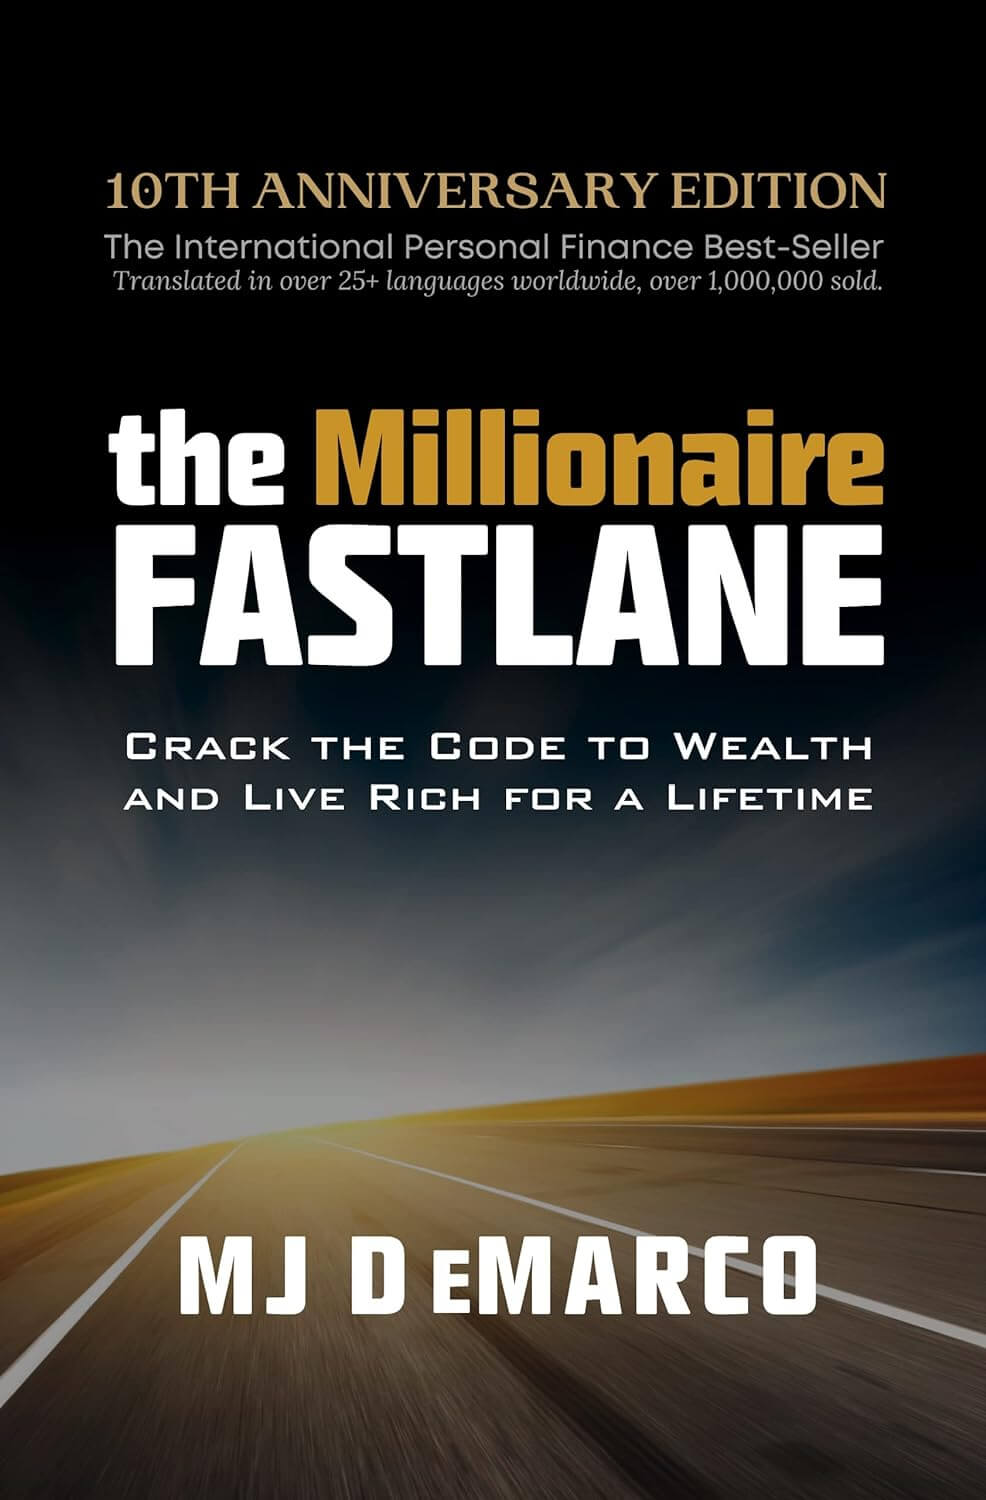 6. MJ DeMarco - 'The Millionaire Fastlane' 🚀